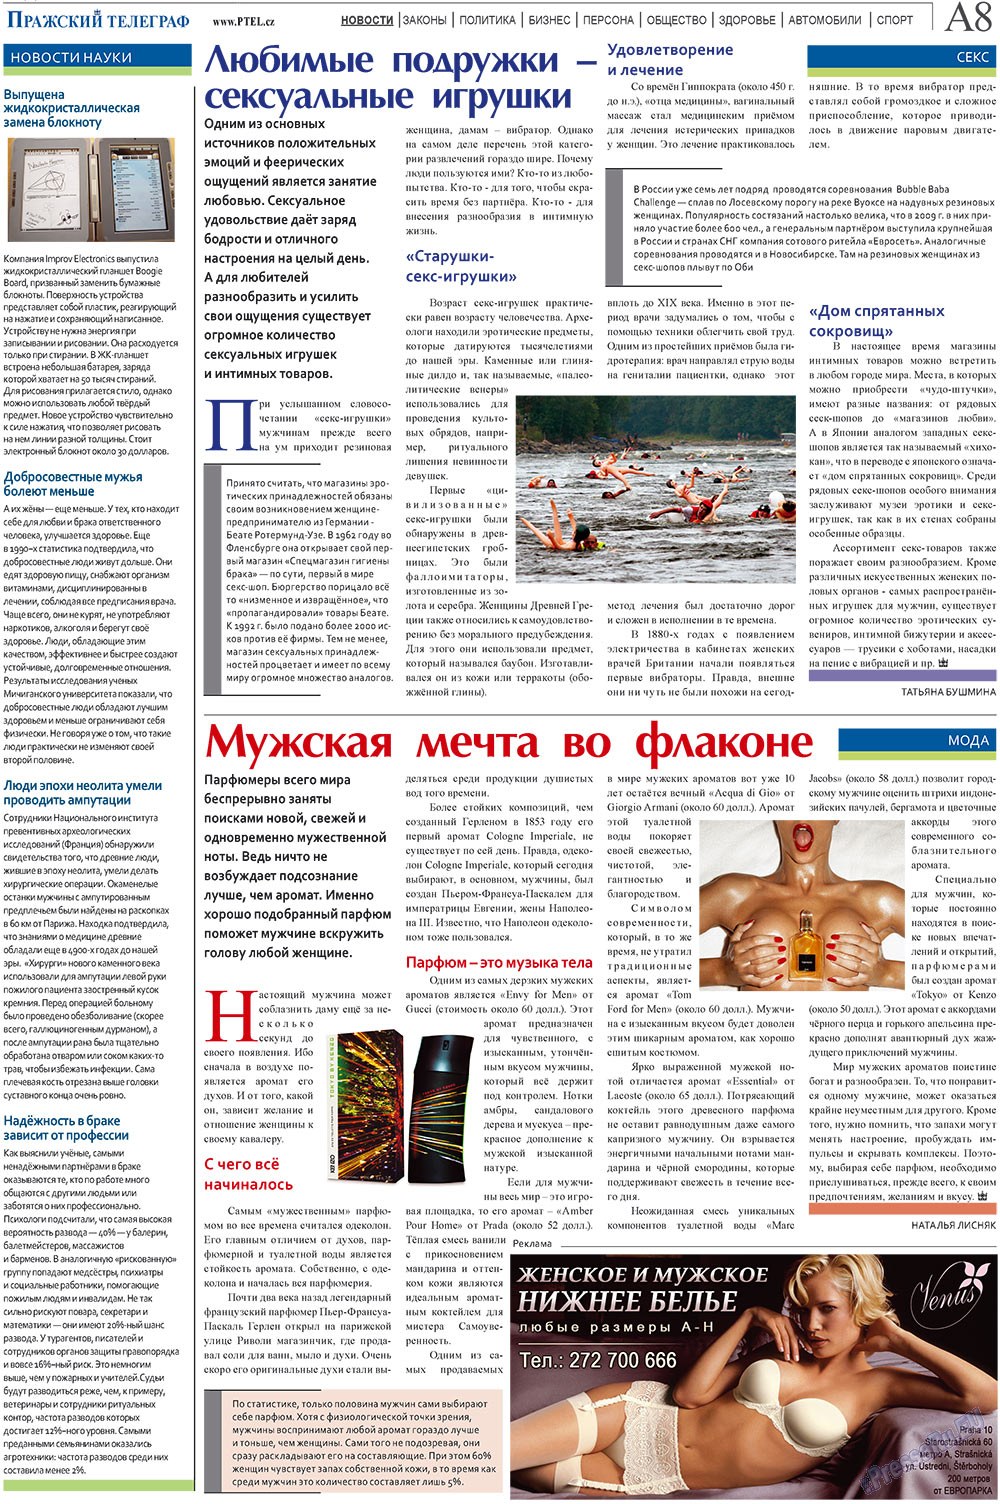 Пражский телеграф, газета. 2010 №4 стр.8